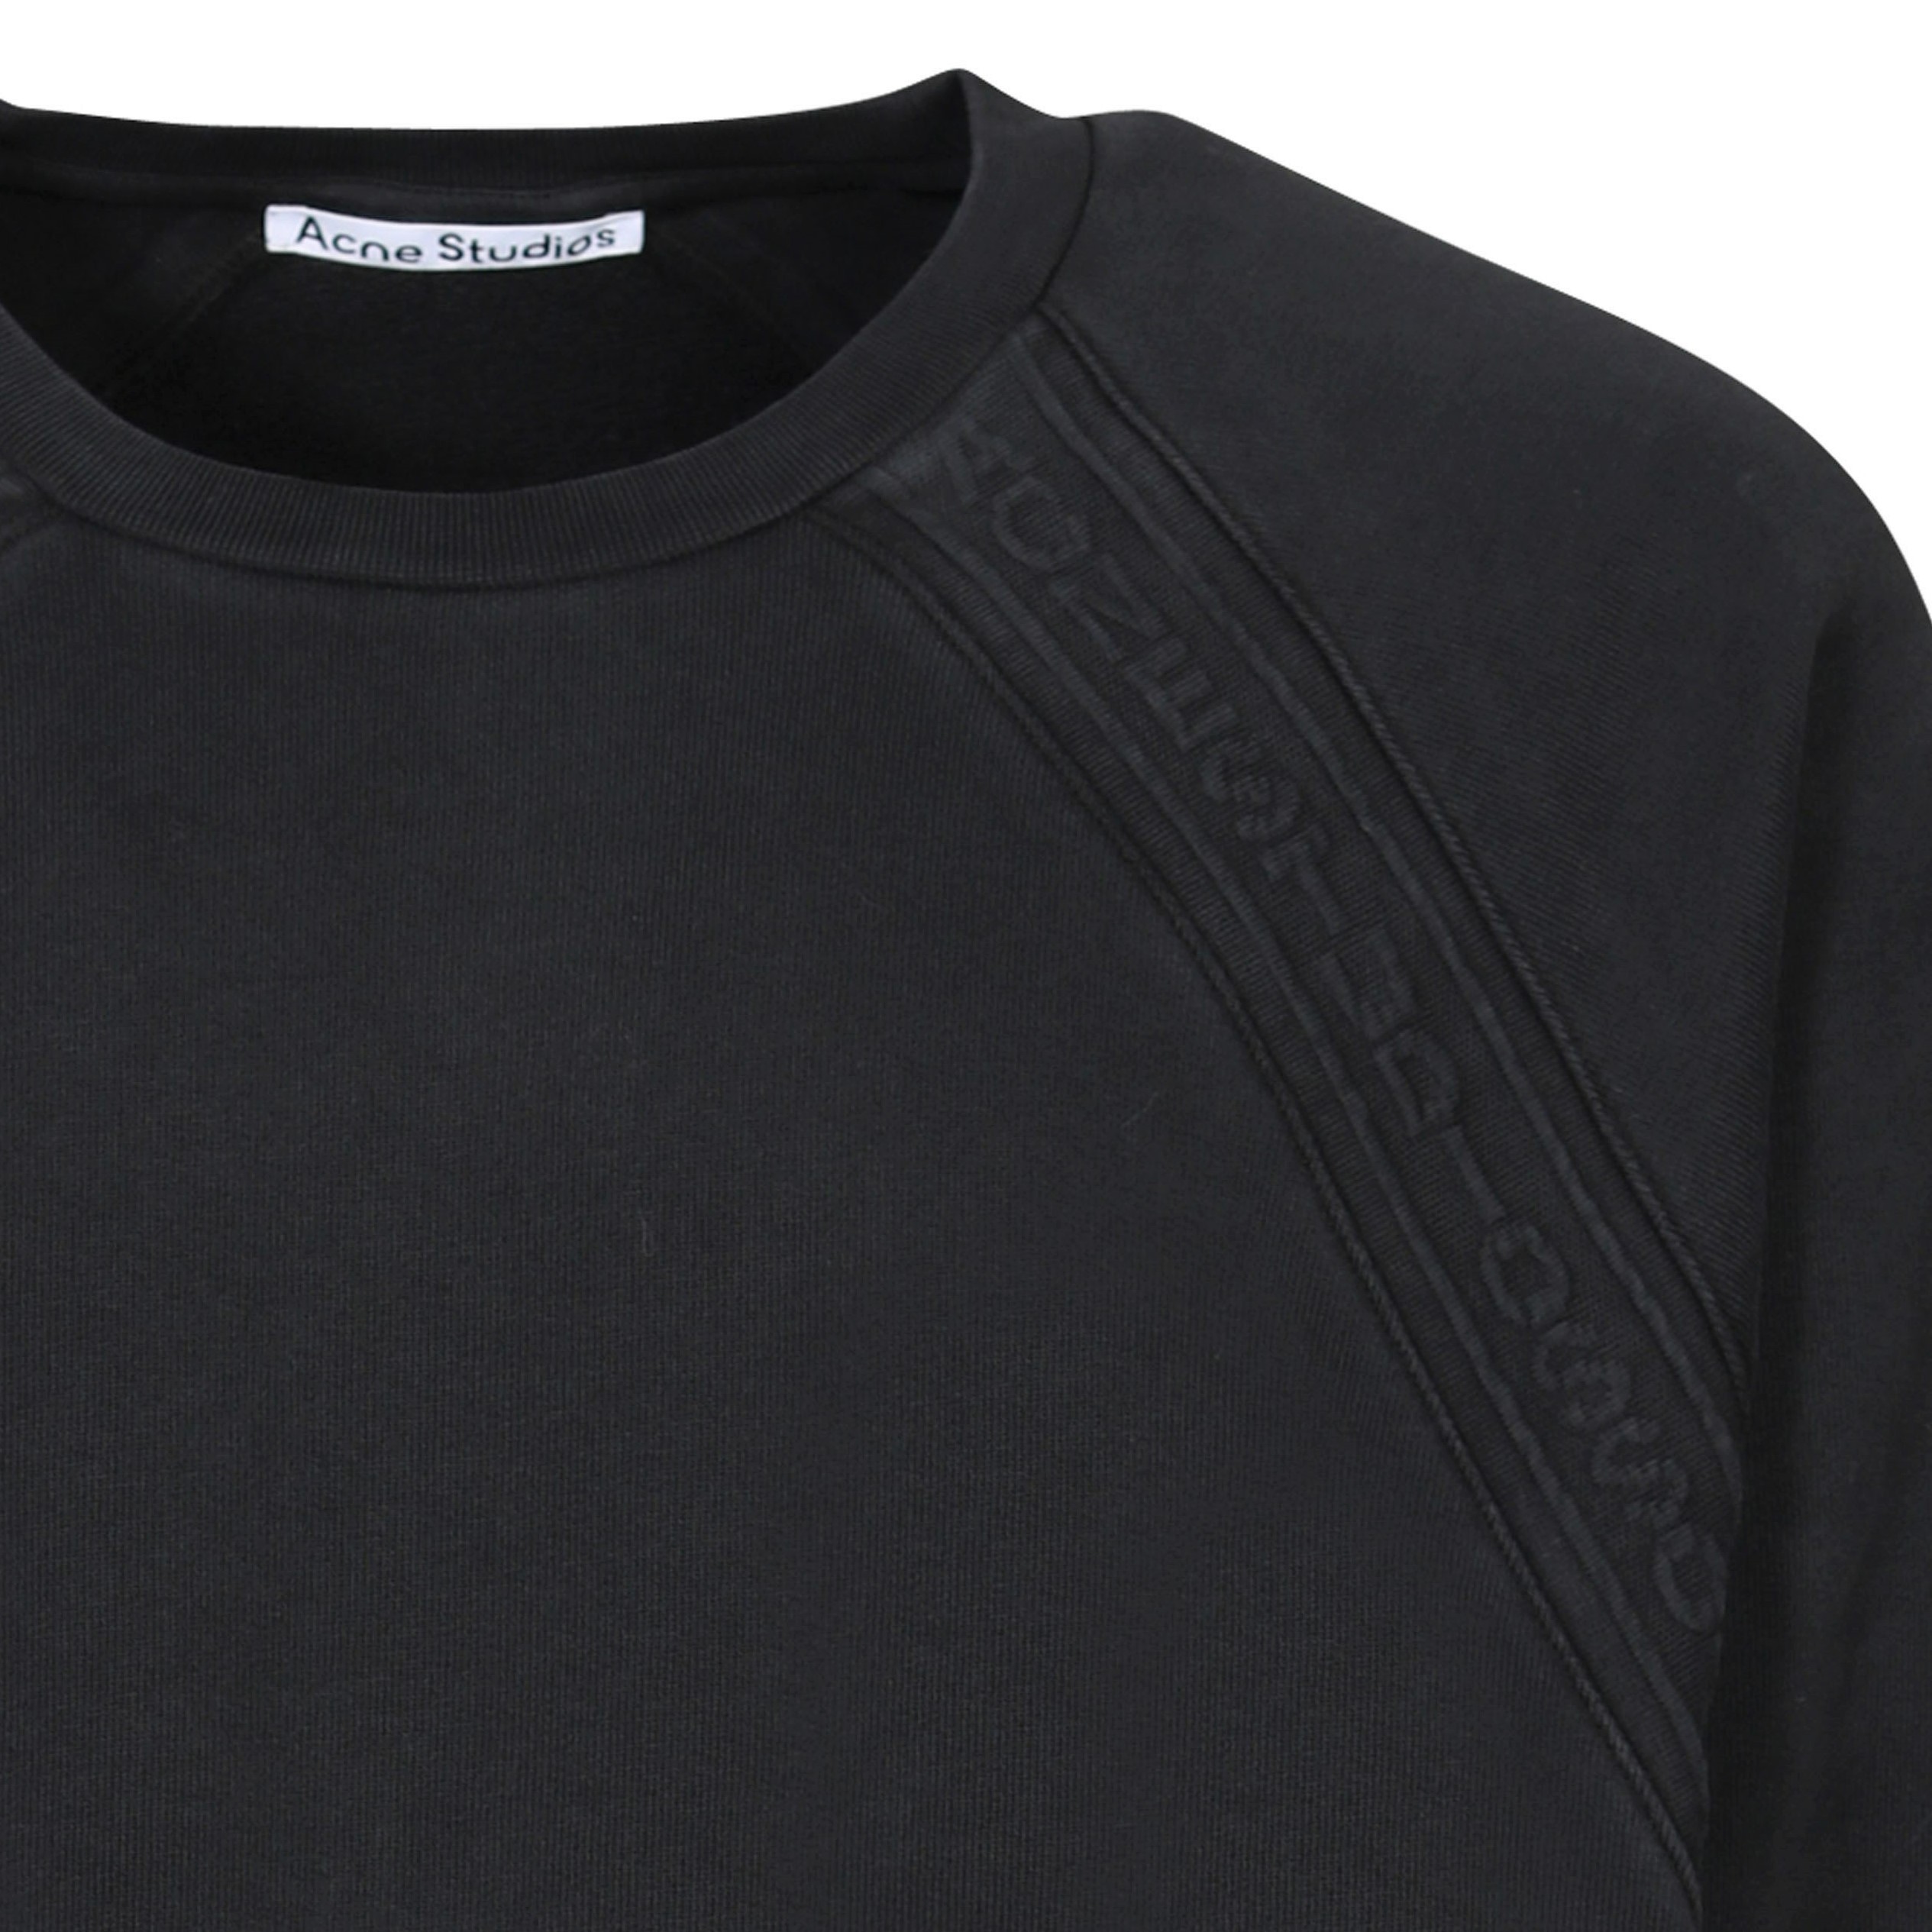 Acne Studios Logo Sweatshirt in Black XL